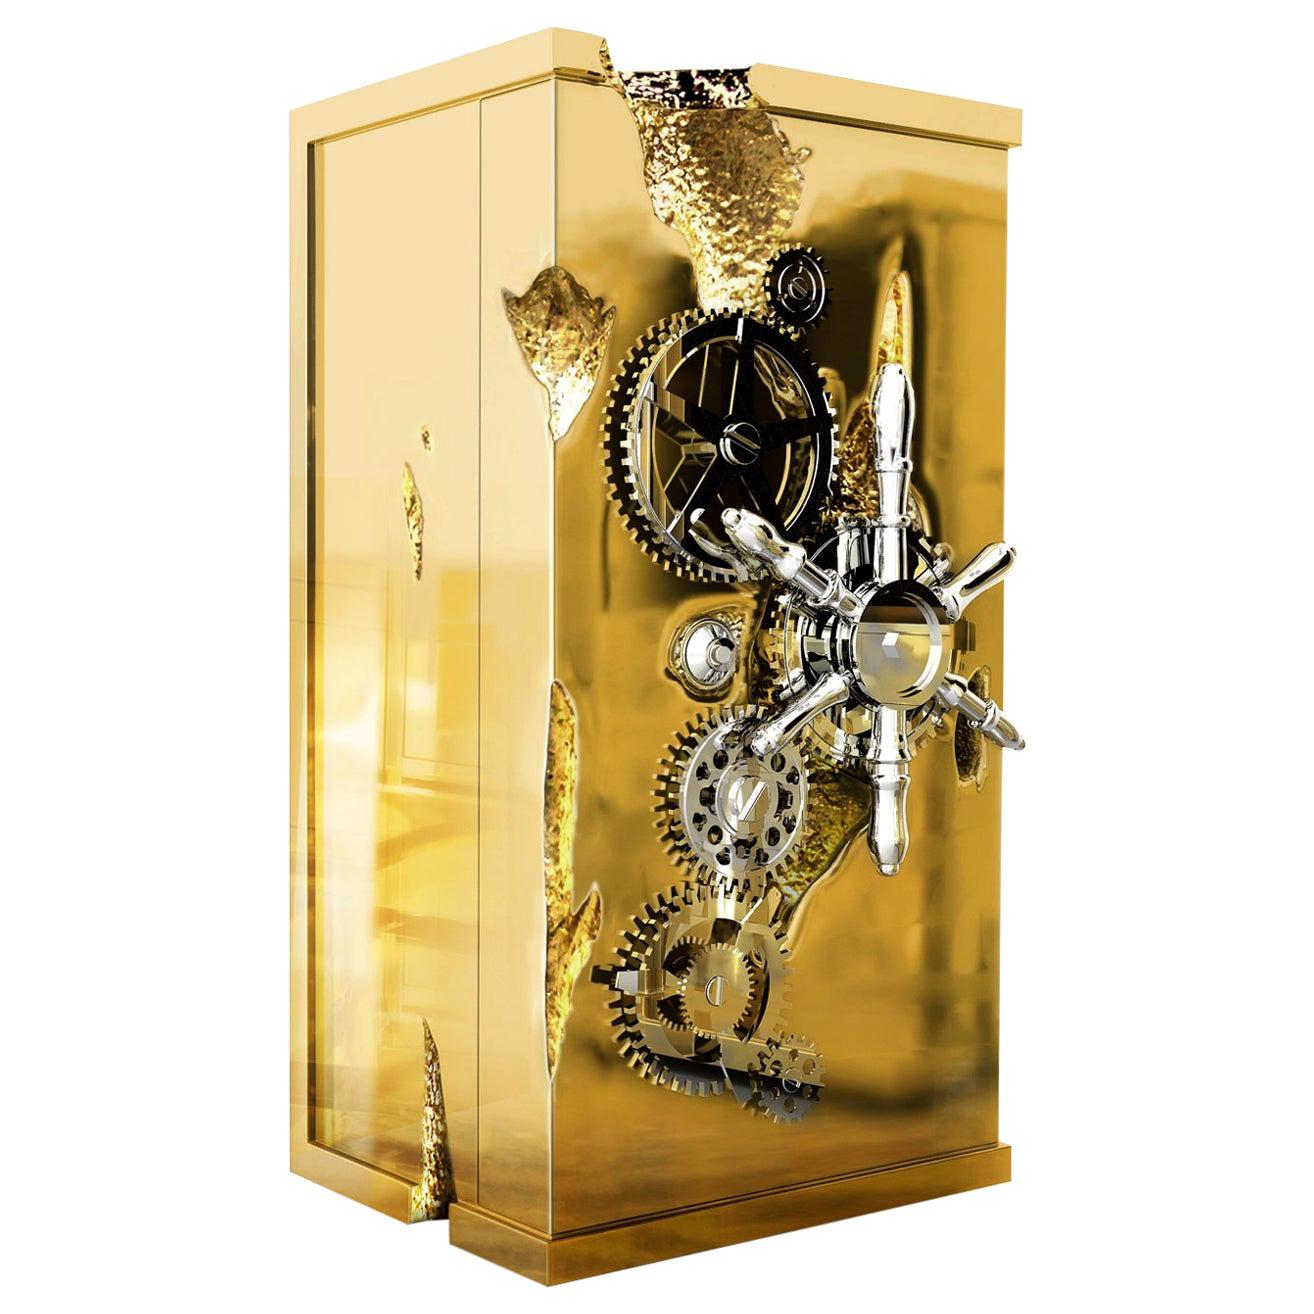 In Stock in Los Angeles, Millionaire Gold Luxury Safe, designed by Boca Do Lobo